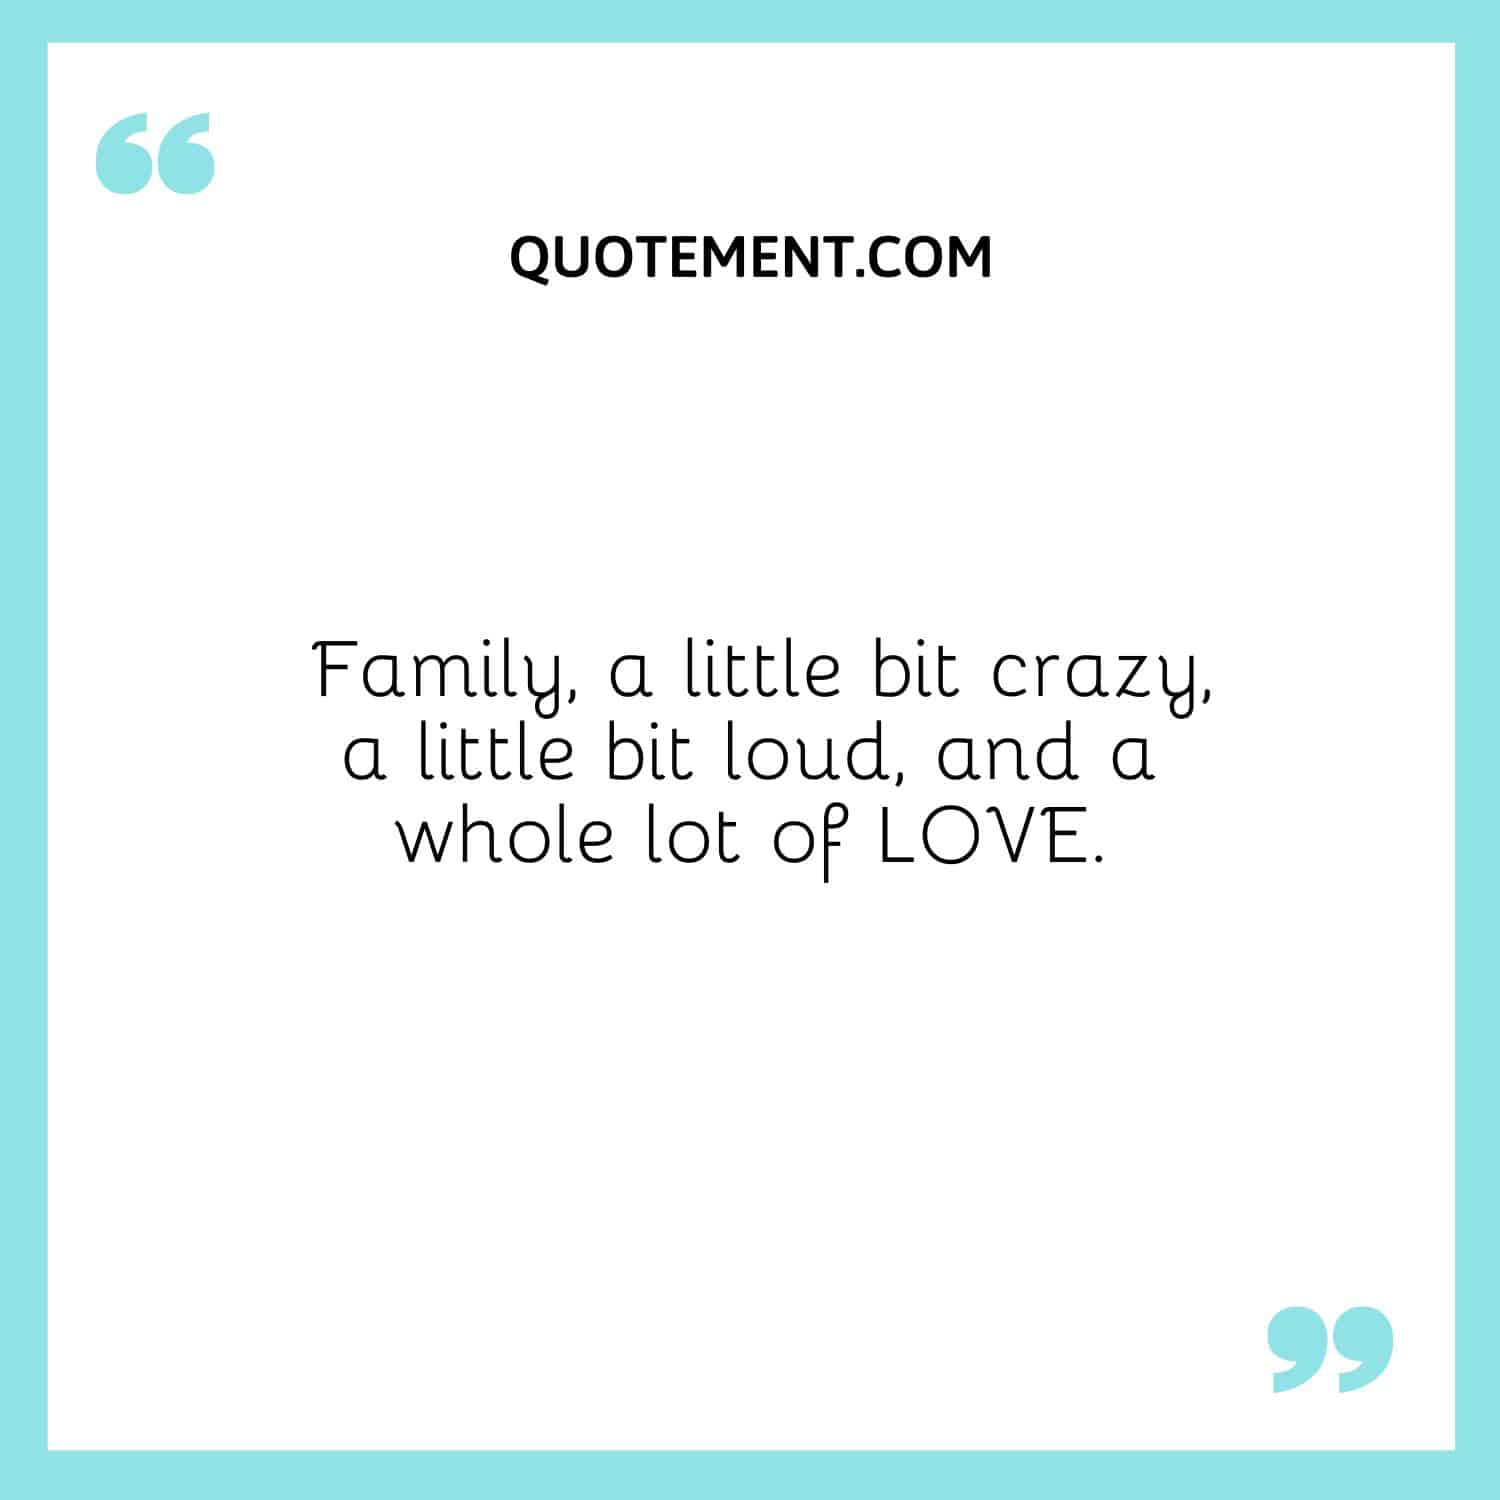 Family, a little bit crazy, a little bit loud, and a whole lot of LOVE